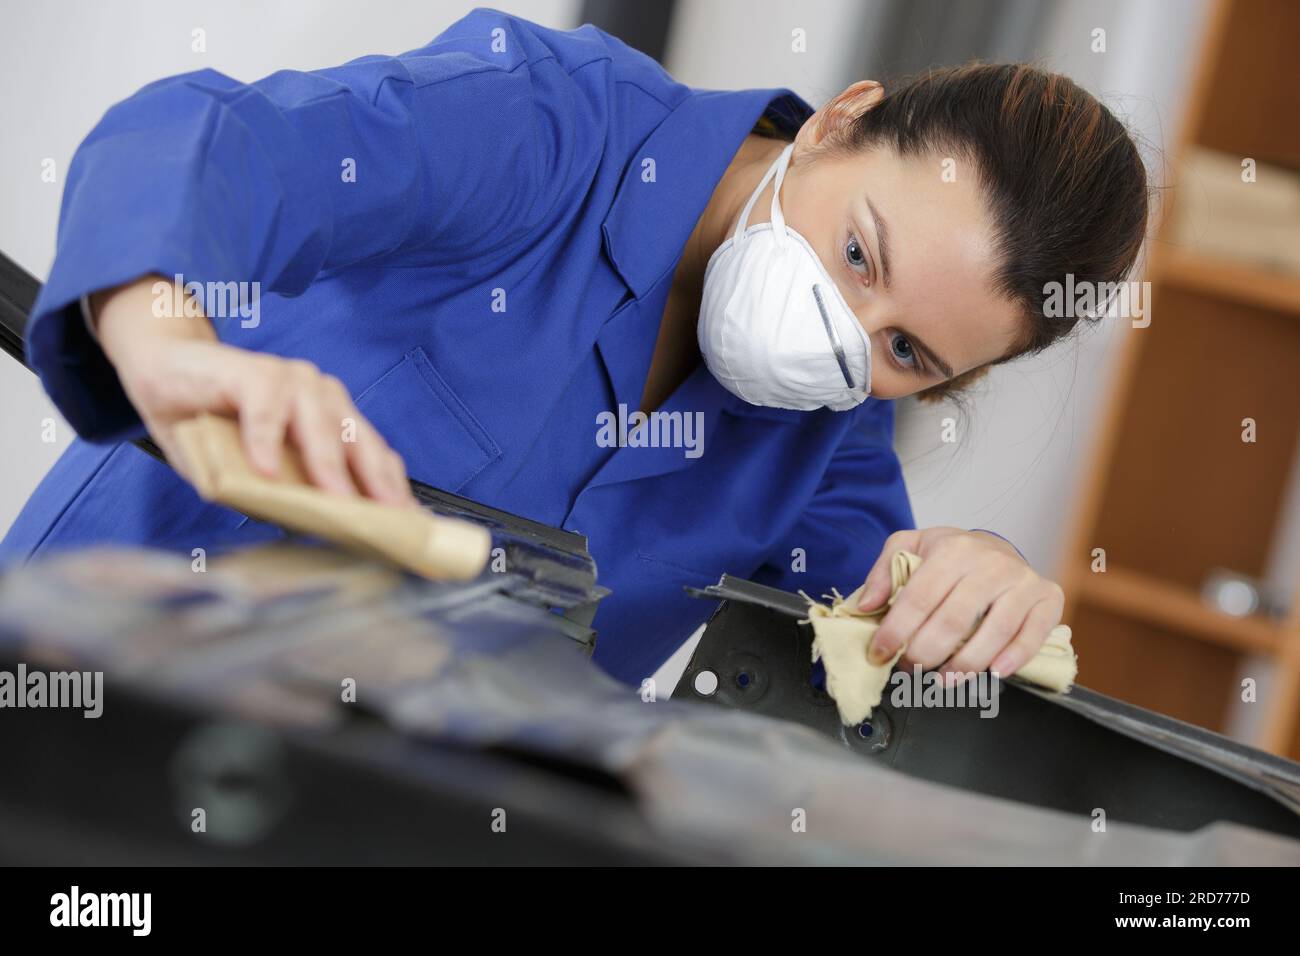 female mechanic sanding a vehicle part Stock Photo